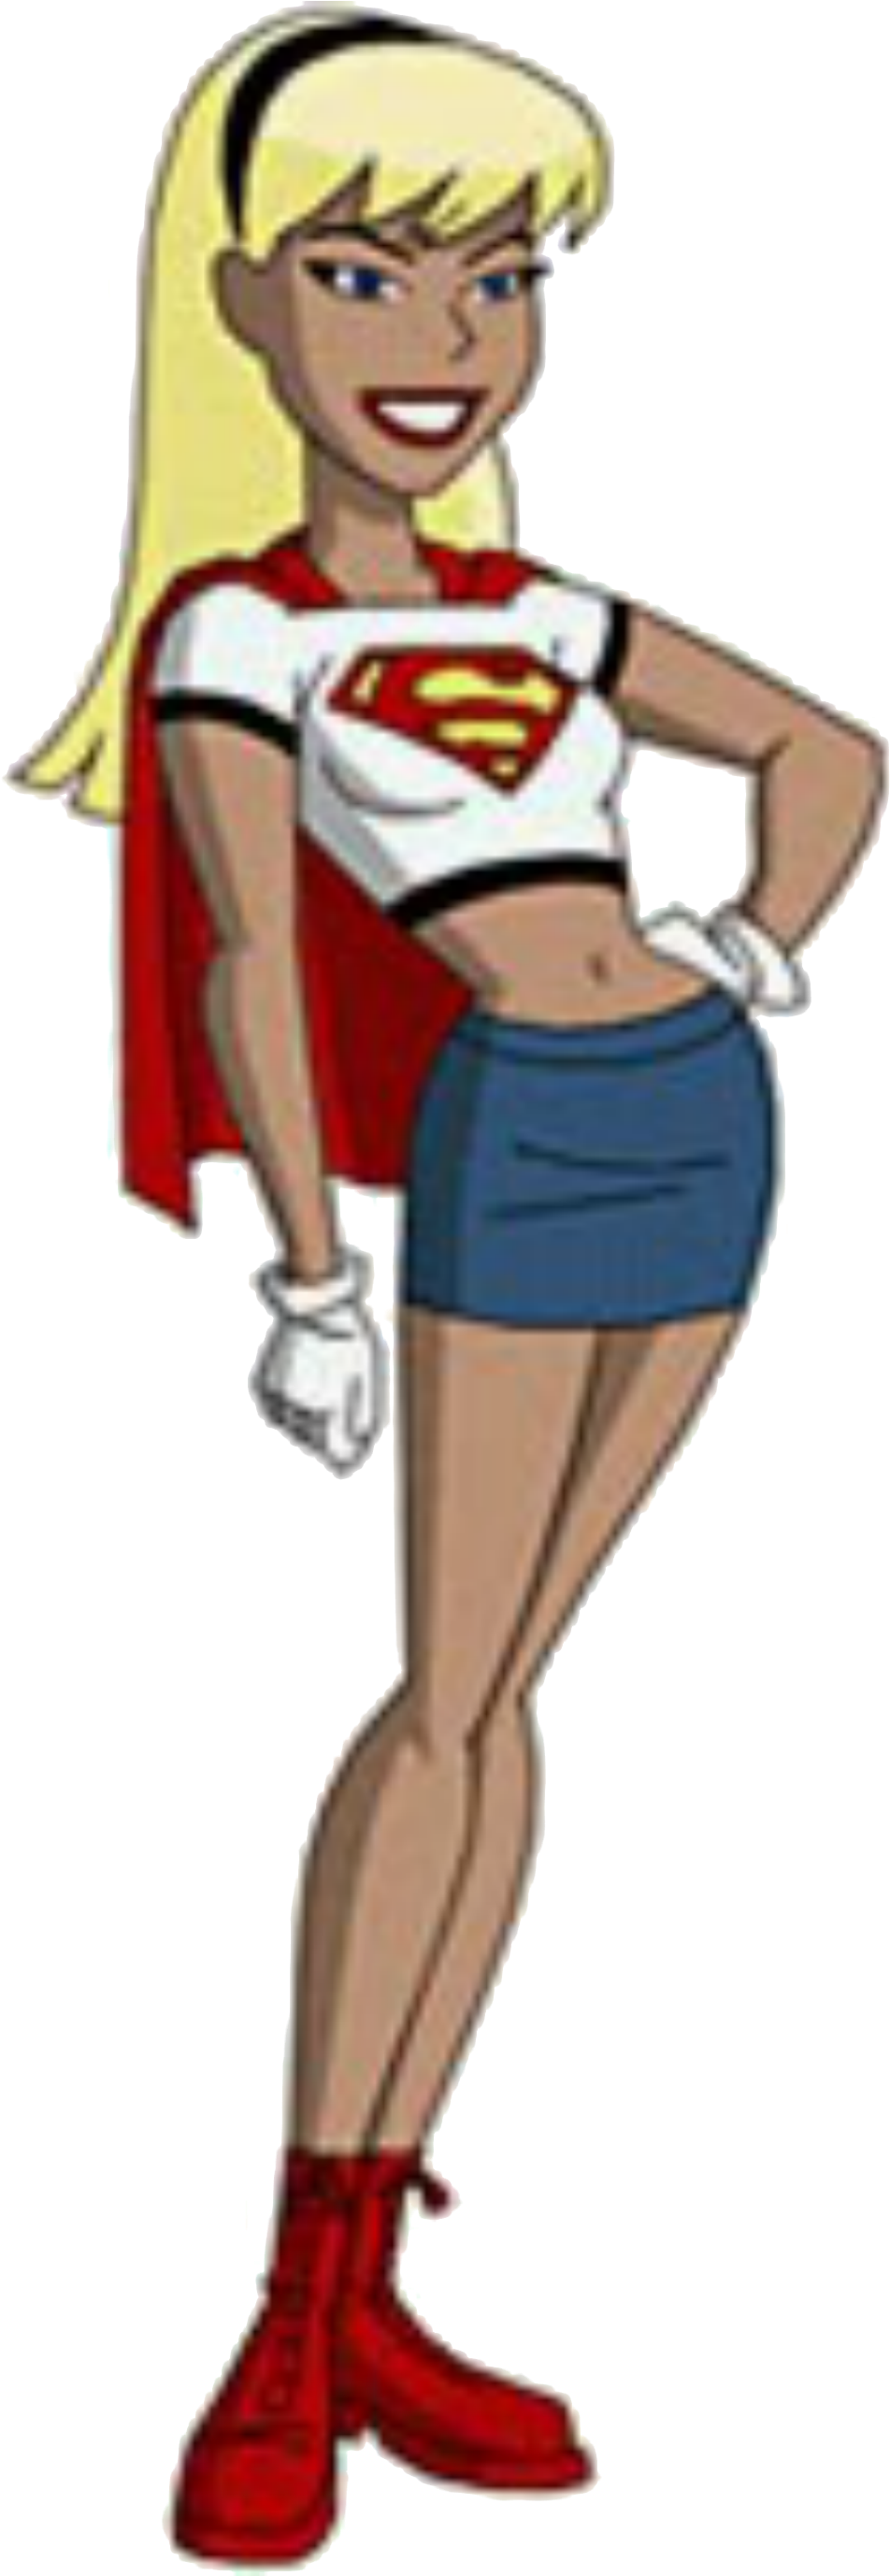 Supergirl 2 - Supergirl Justice League Unlimited (1010x2754)